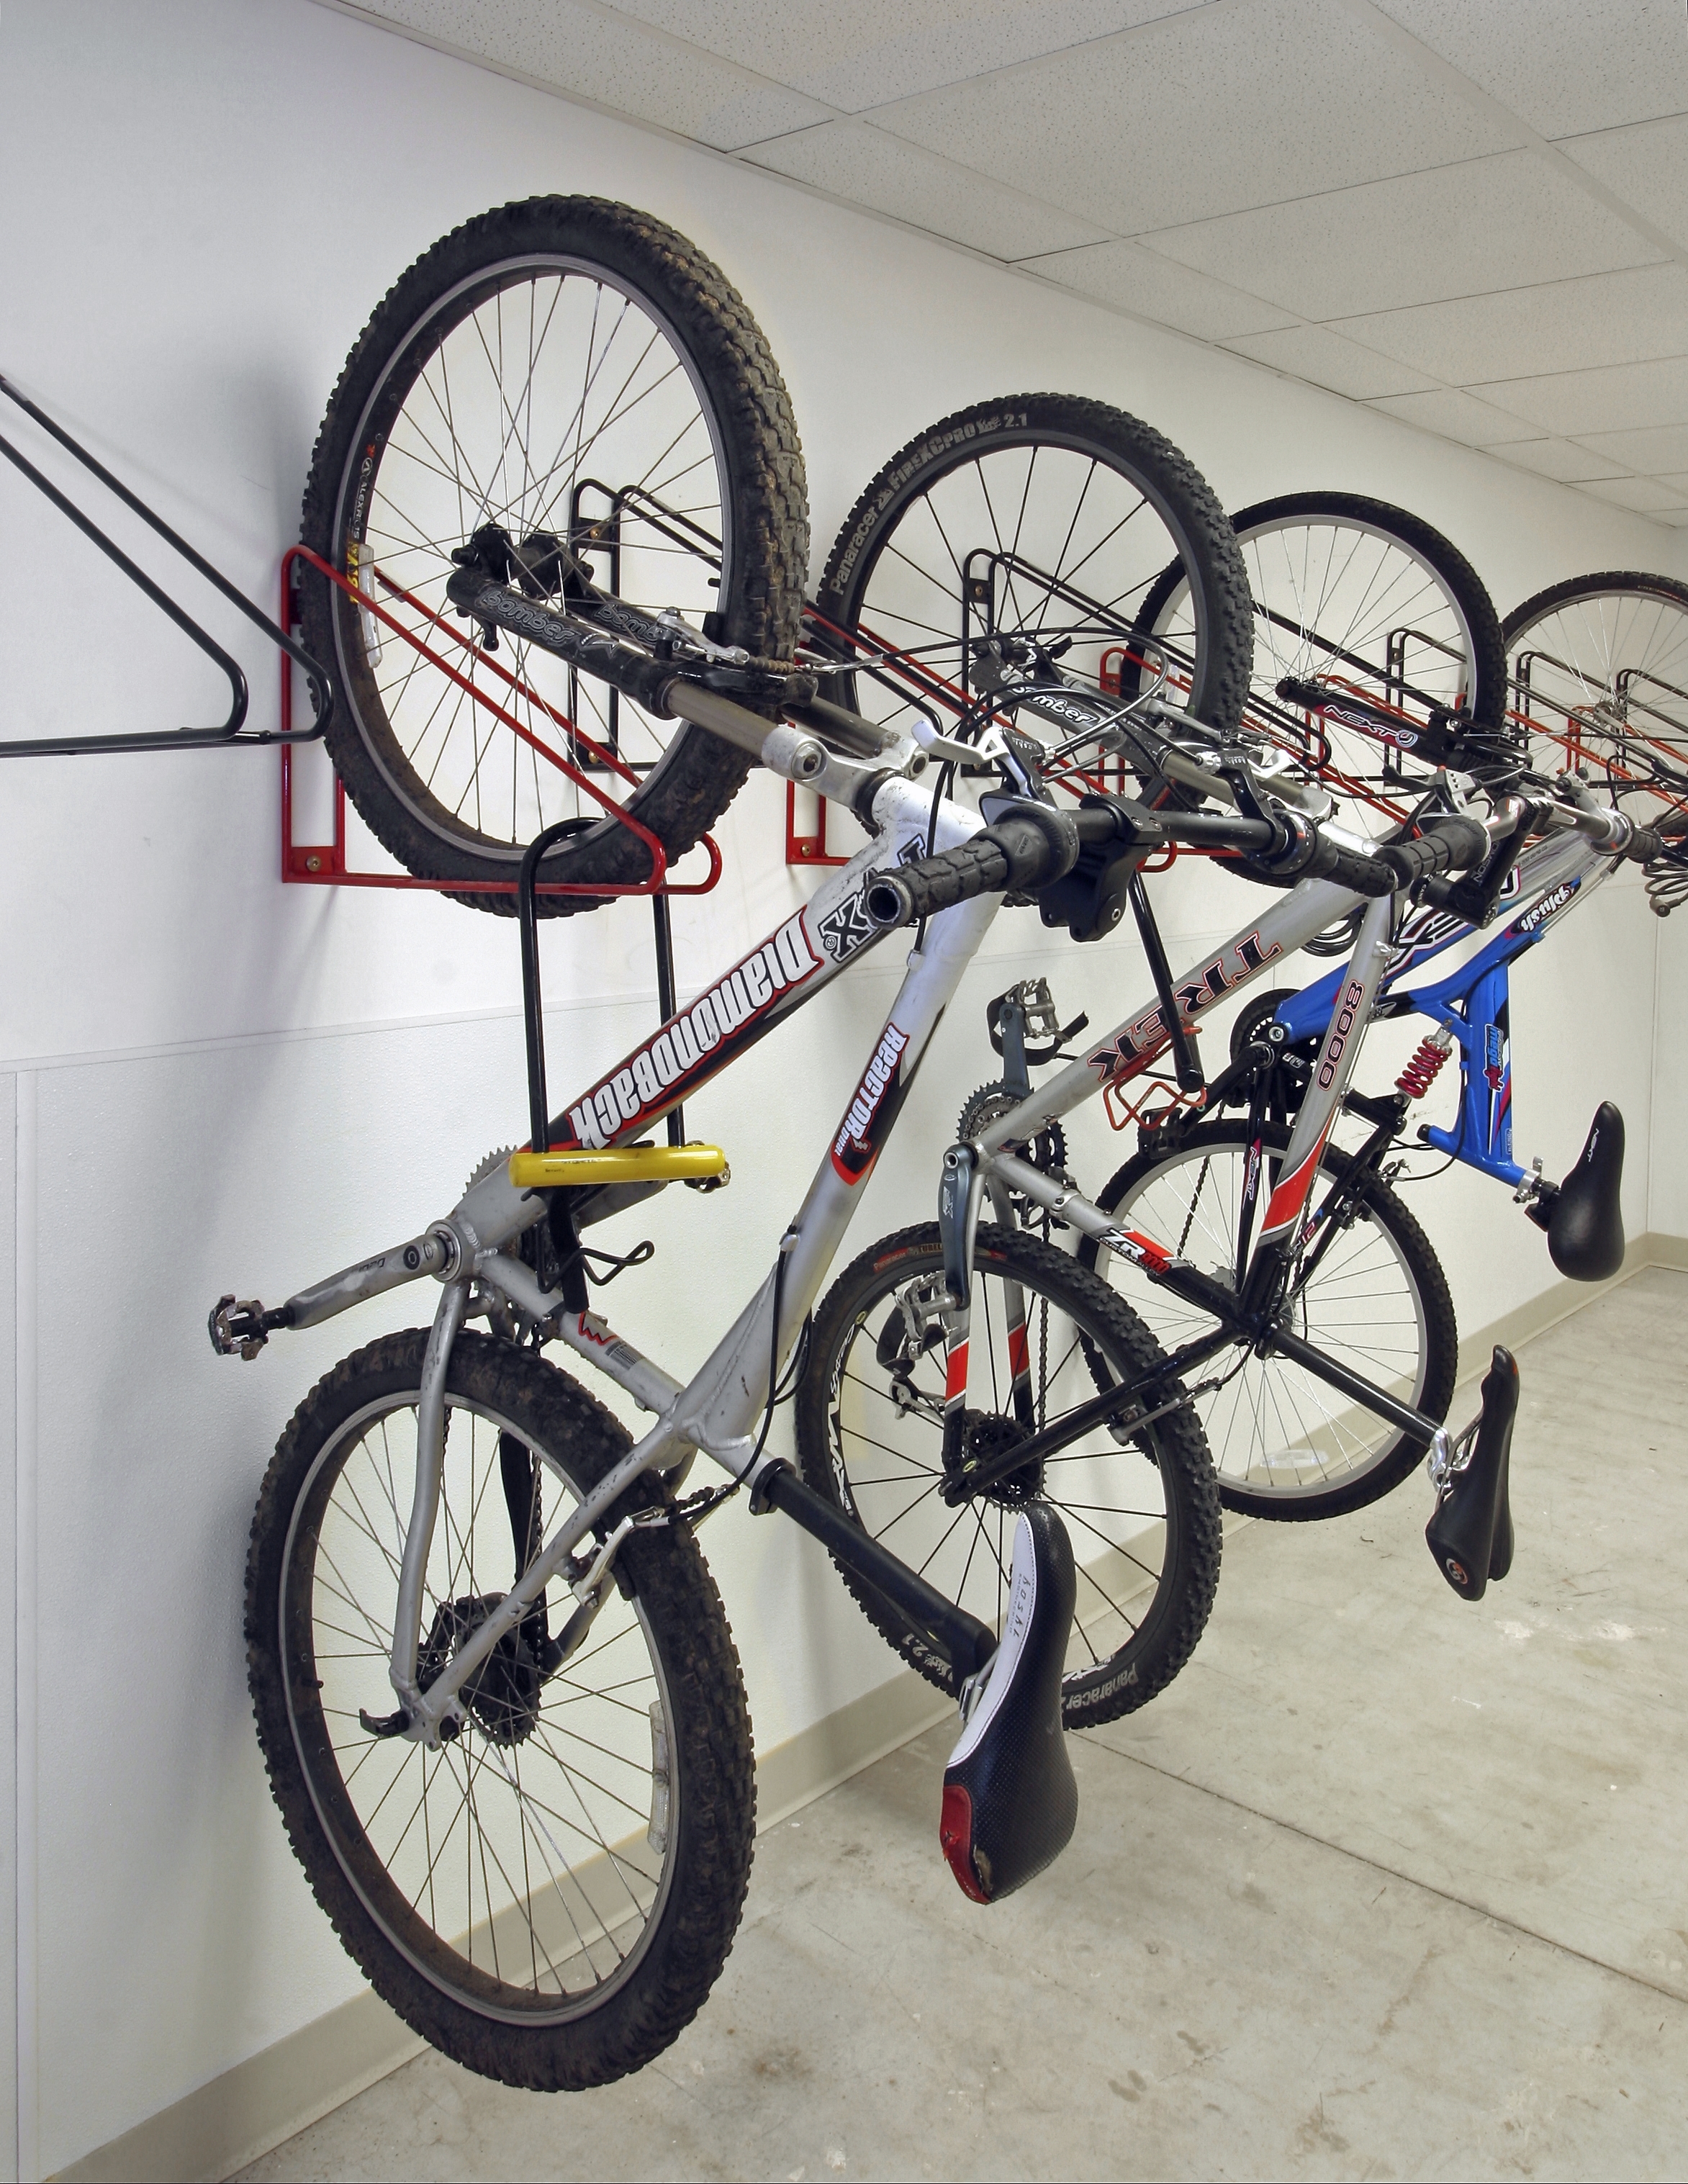 Cyclesafe Wall Mount Bike Racks